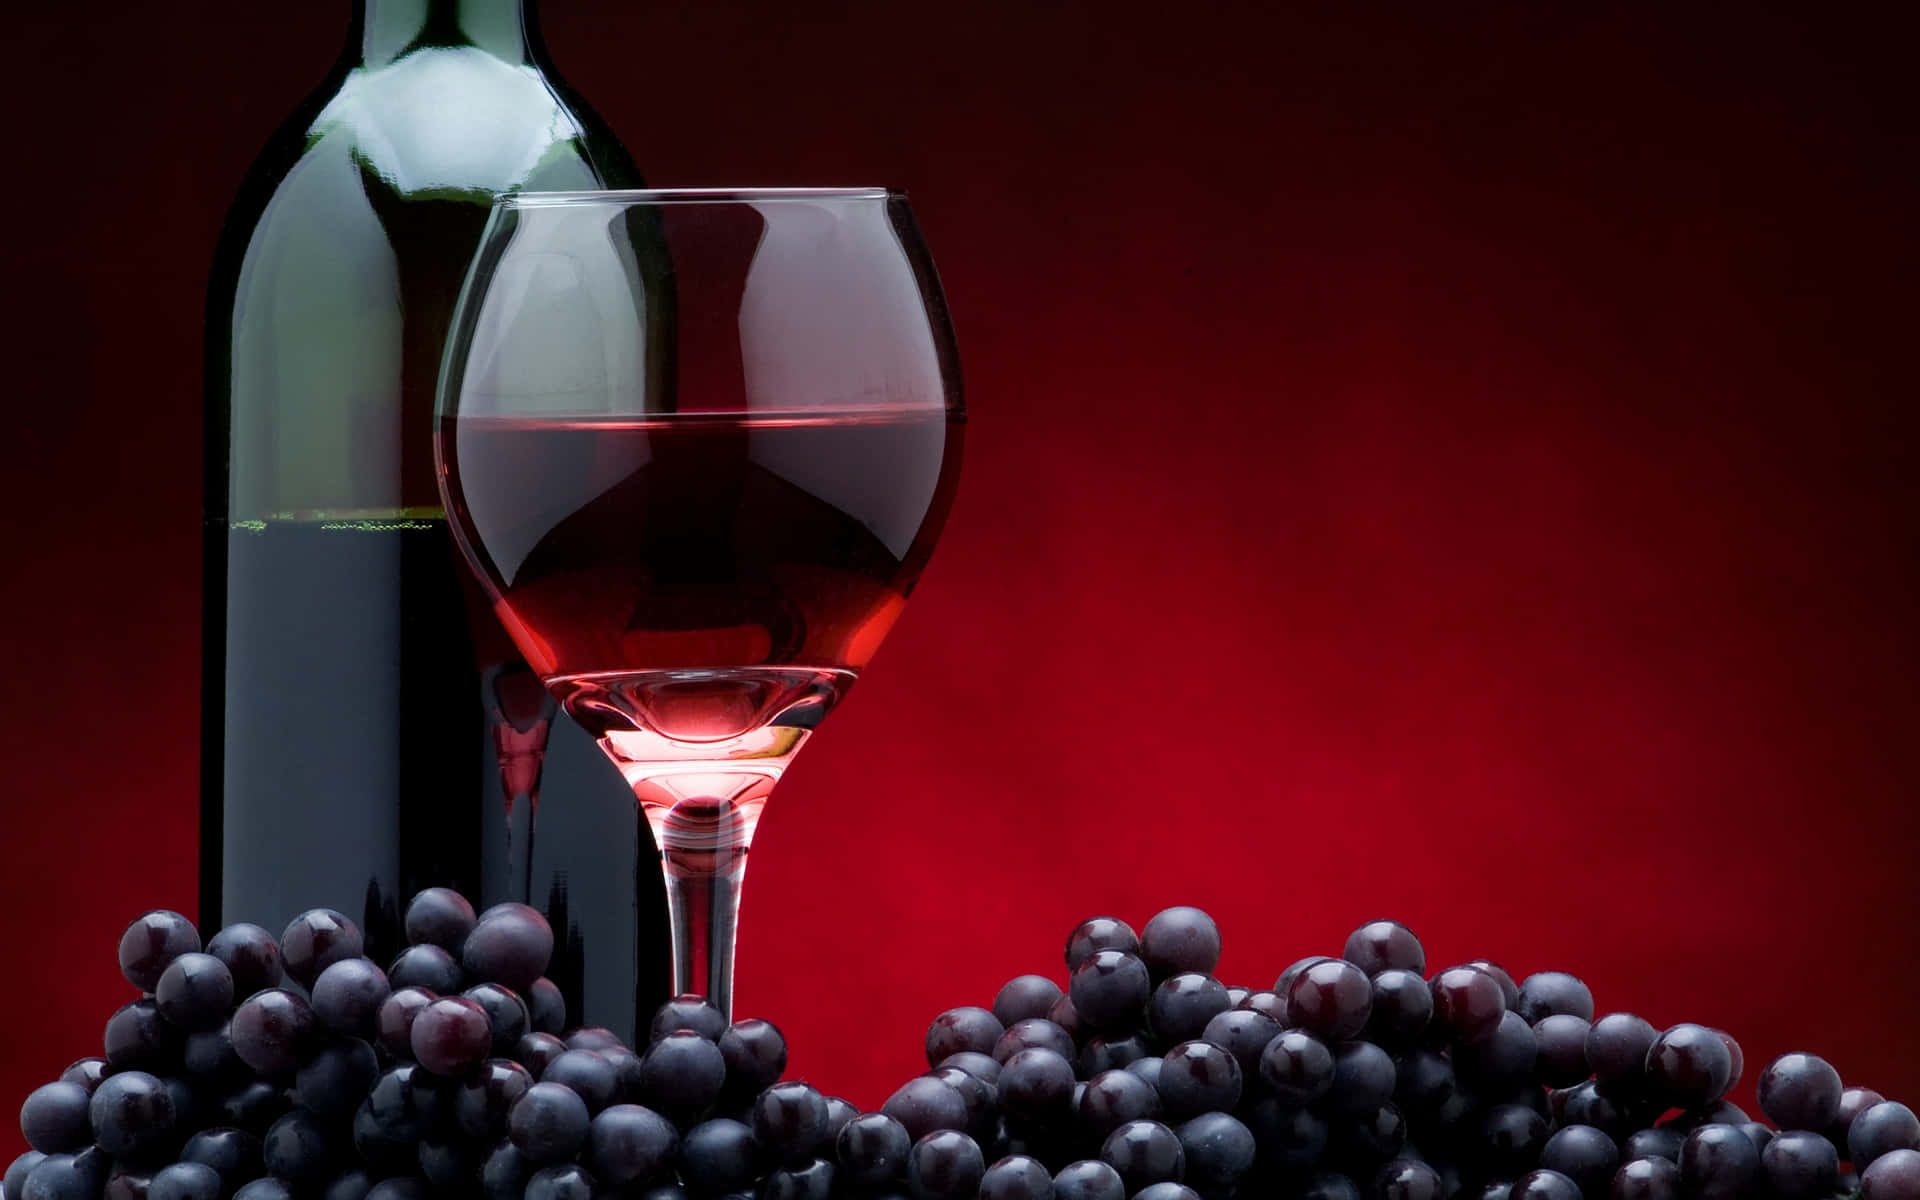 An Evening of Enjoying a Glass of Red Wine